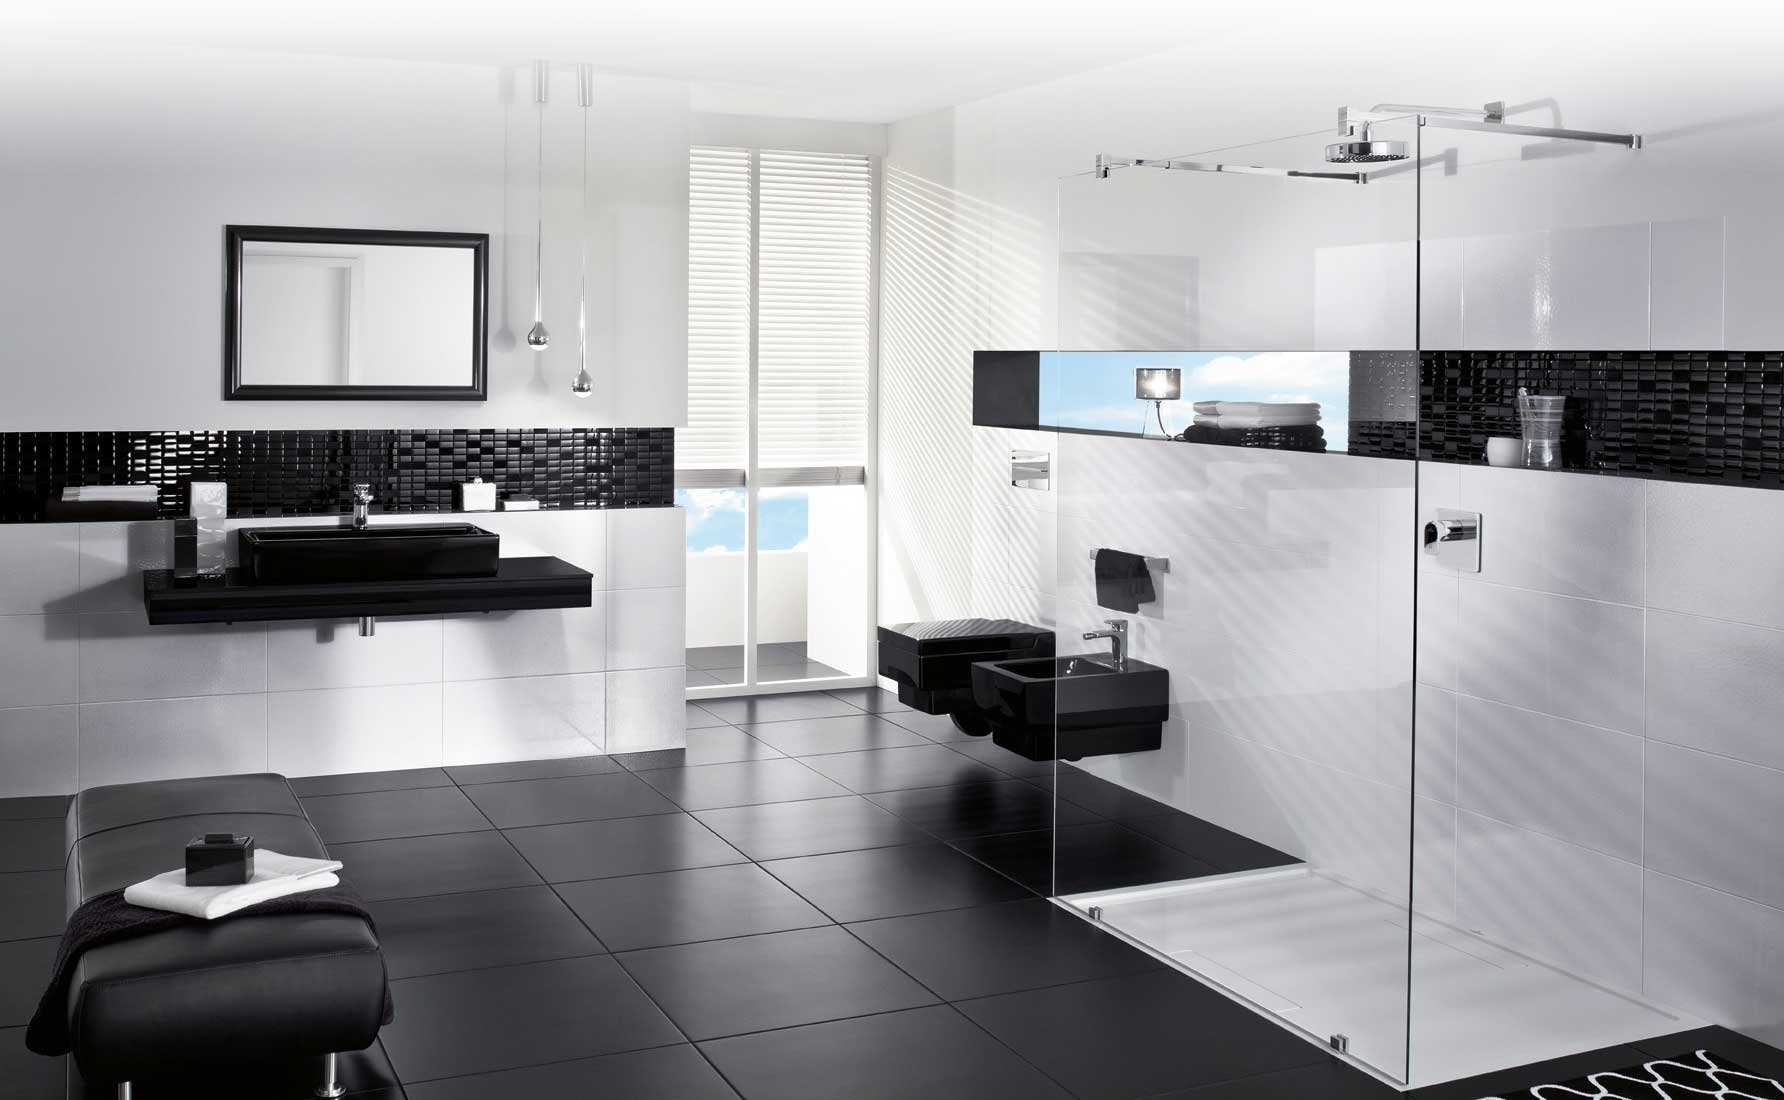 10 Spectacular Black And White Bathroom Ideas extraordinary bathroom decorating ideas black and white design 2022